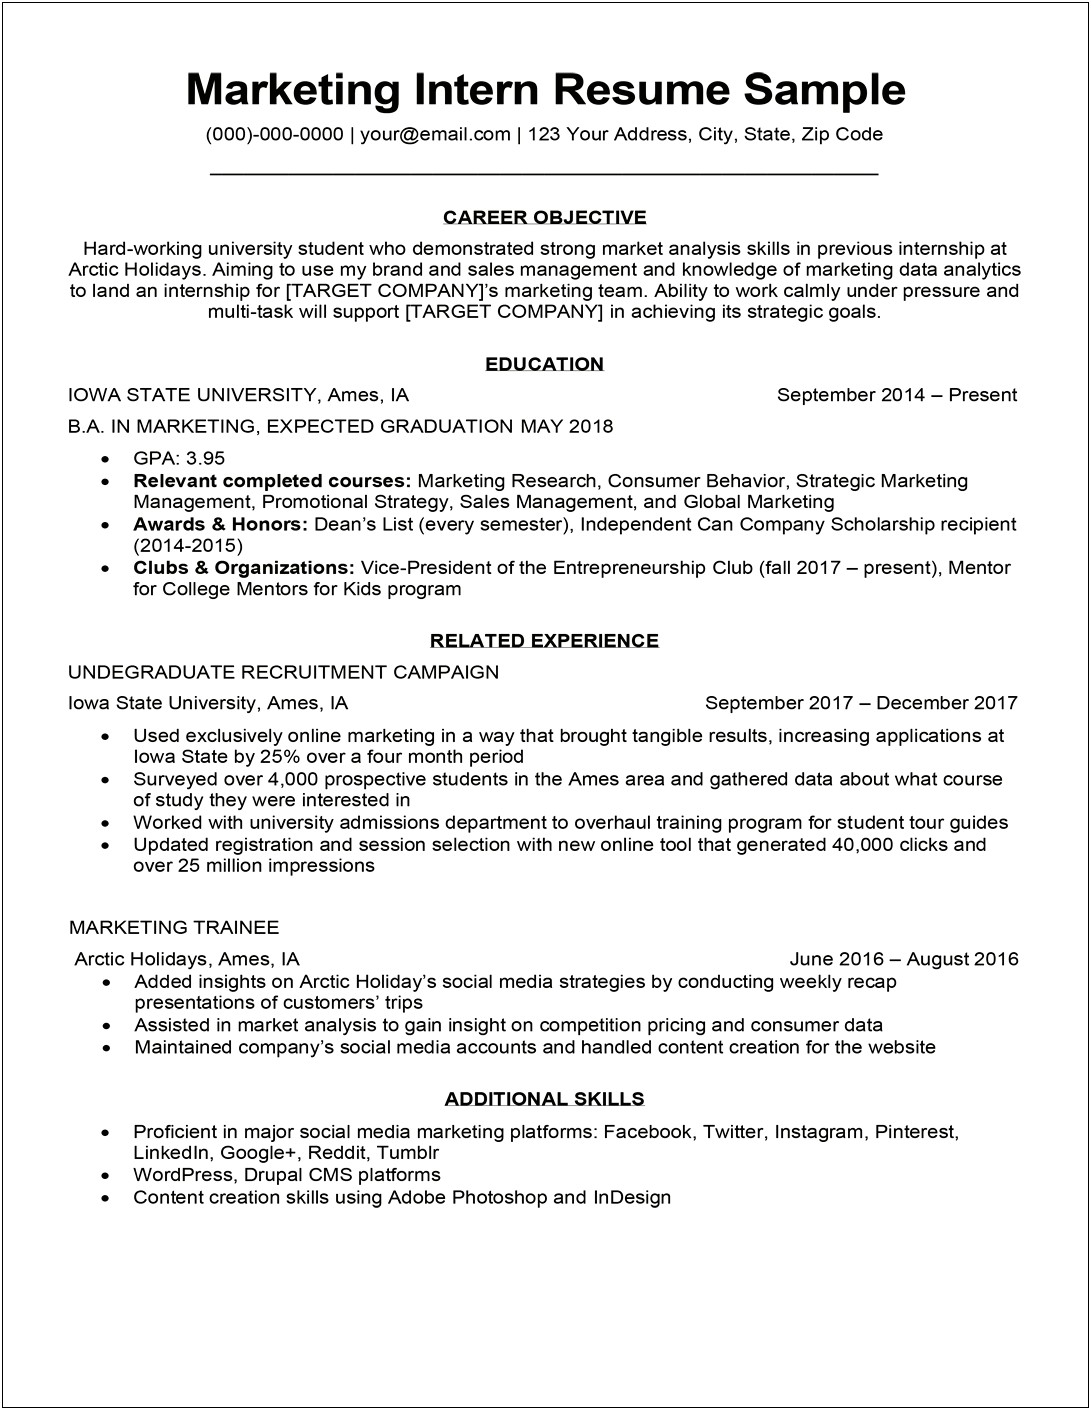 Resume With Internship Experience Sample